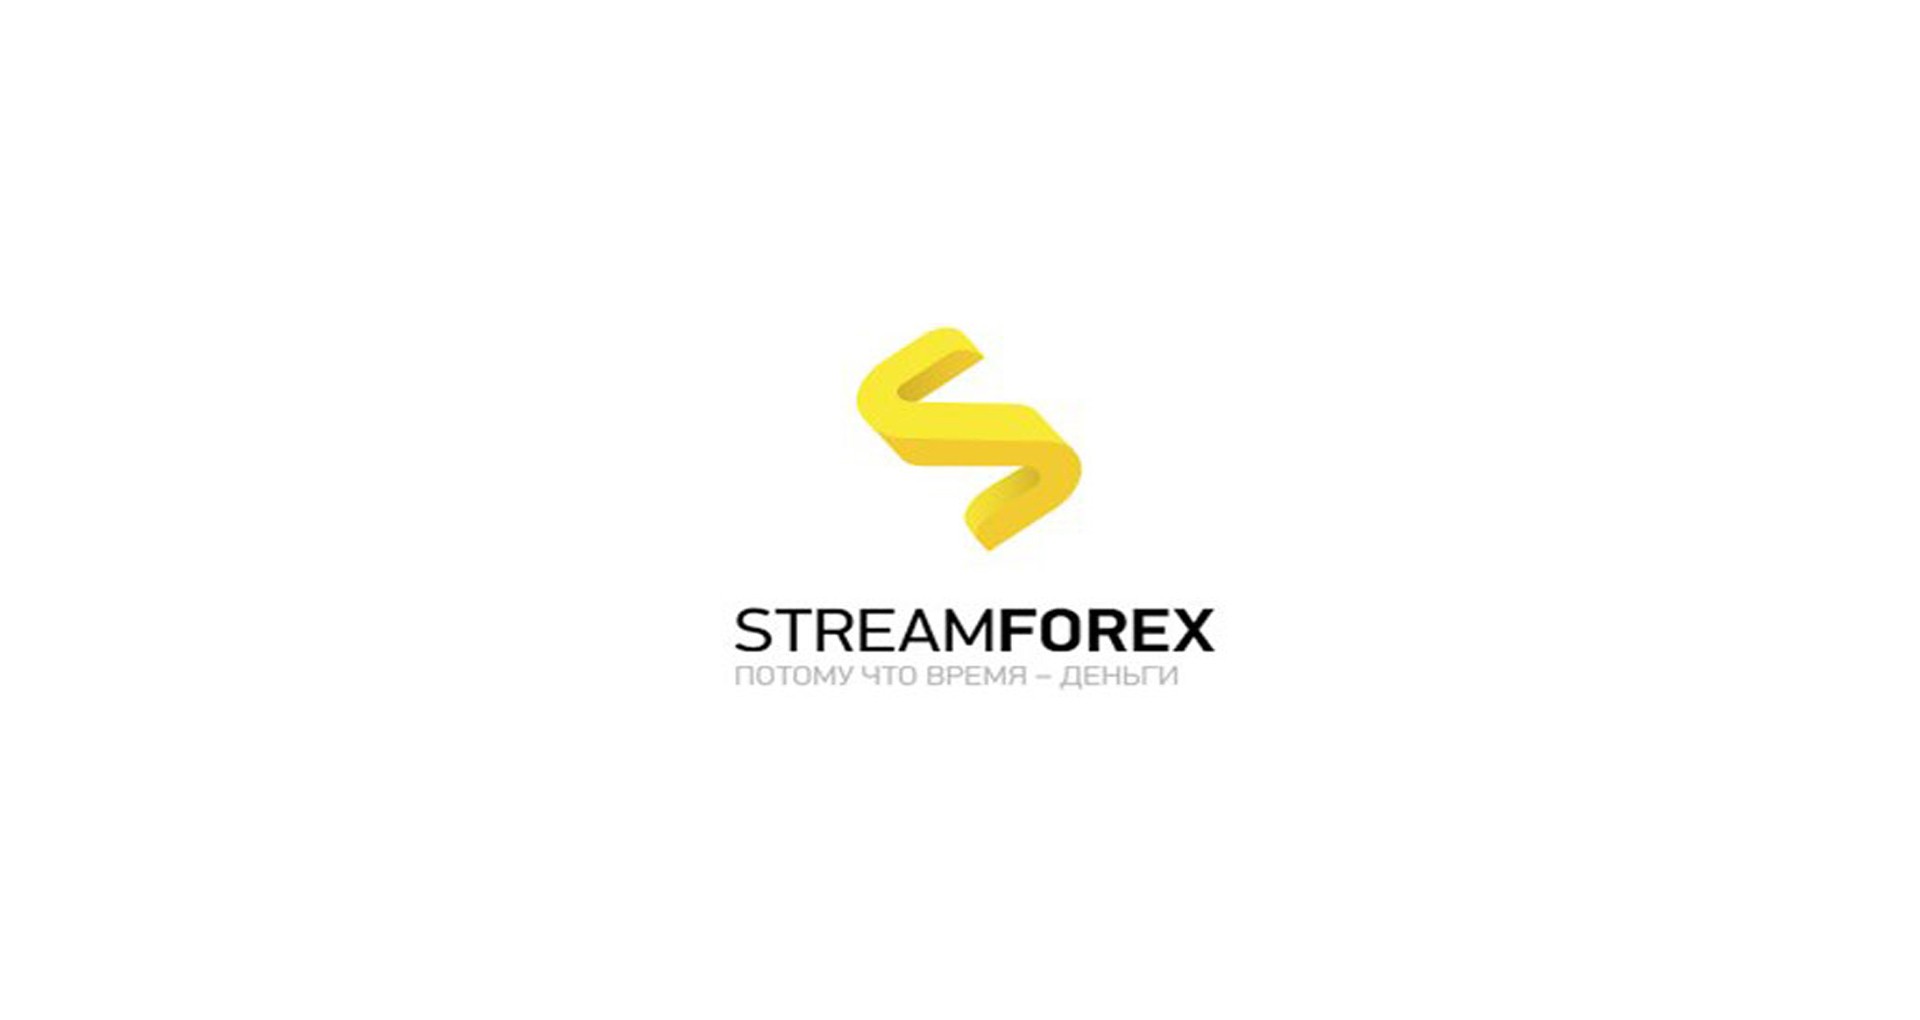 STREAMFOREX. Stream forex. Royal Financial trading.